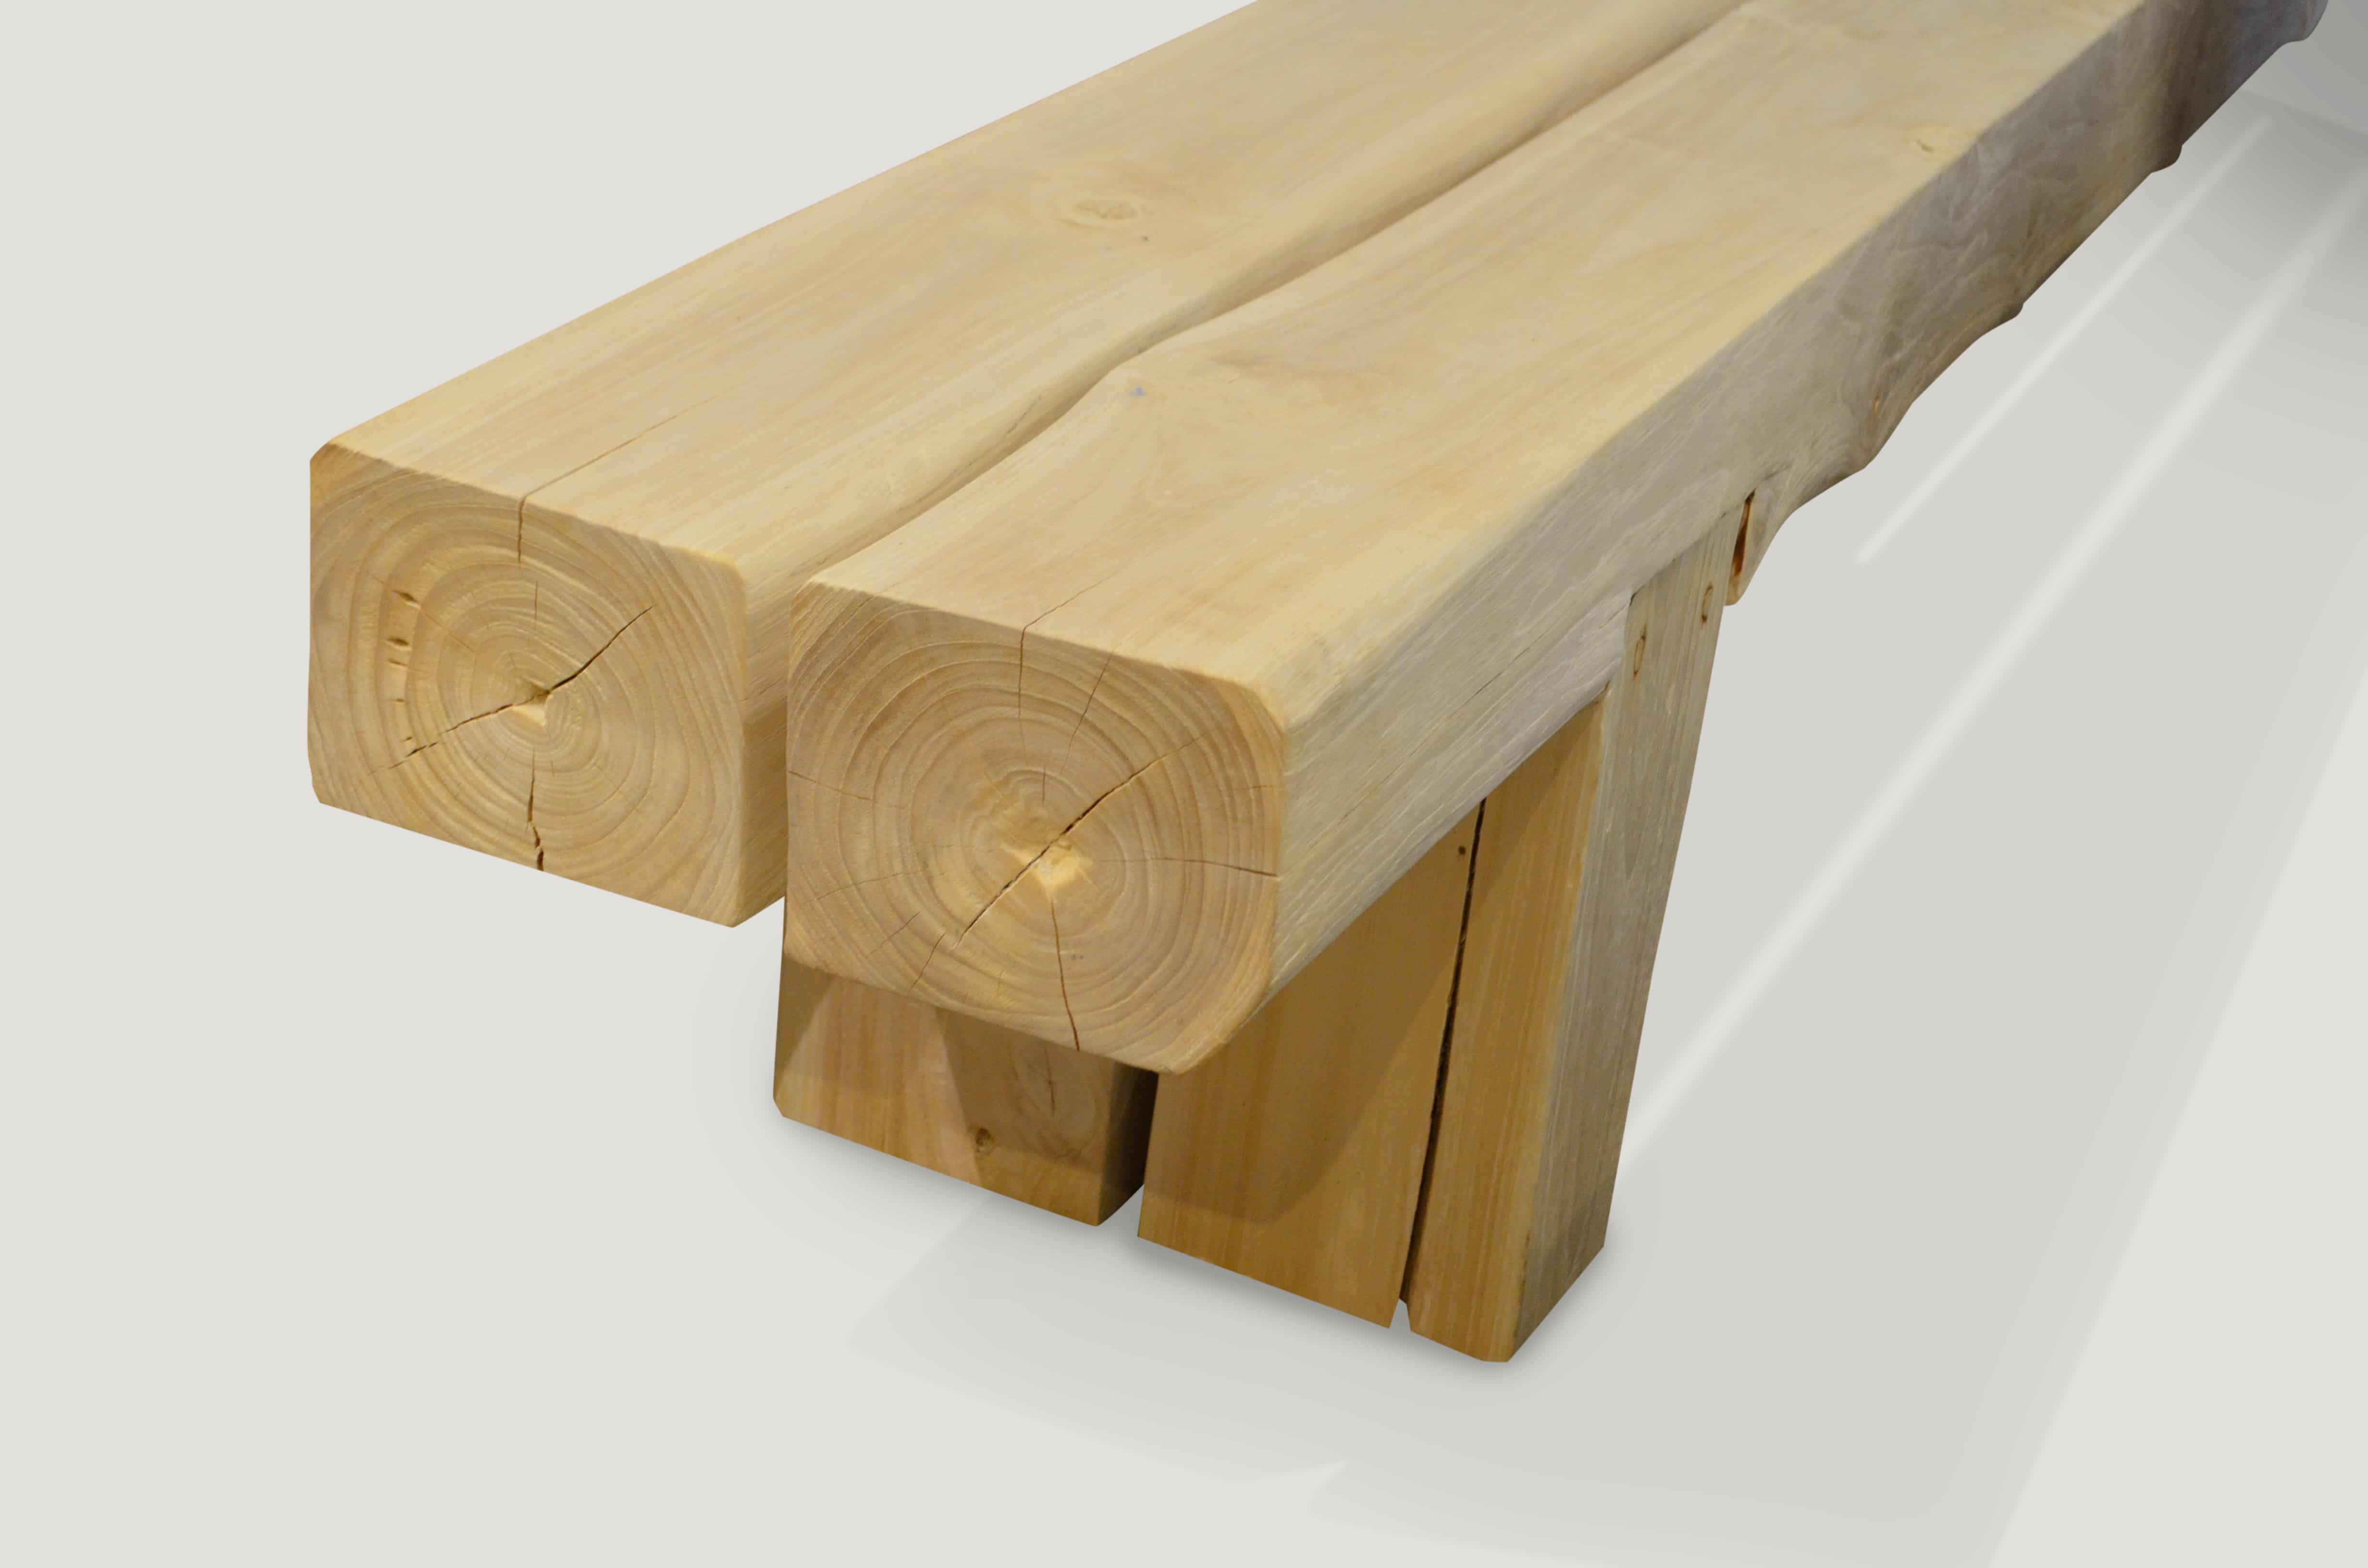 st barts teak wood log bench